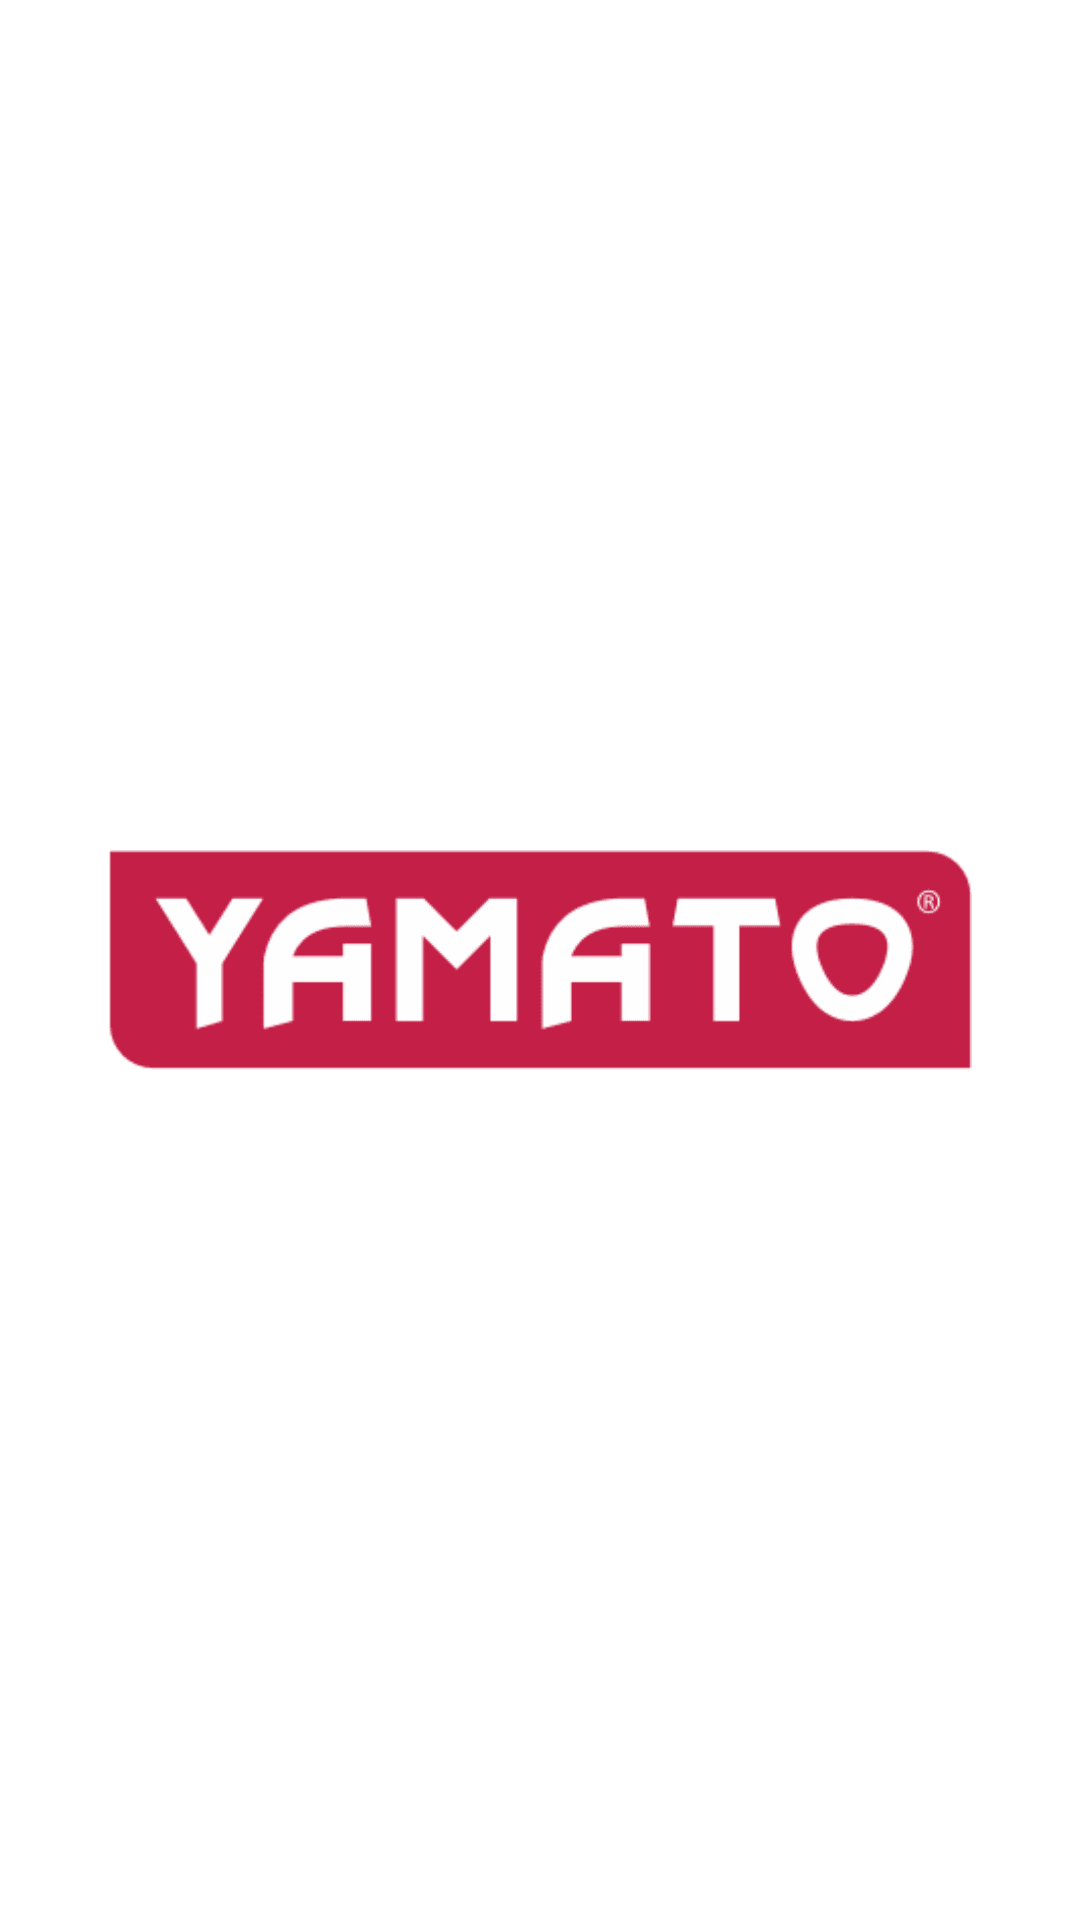 Yamato - Asta a bandiera per elevatori cm.75 portata kg.600 - Pisan Ferramenta